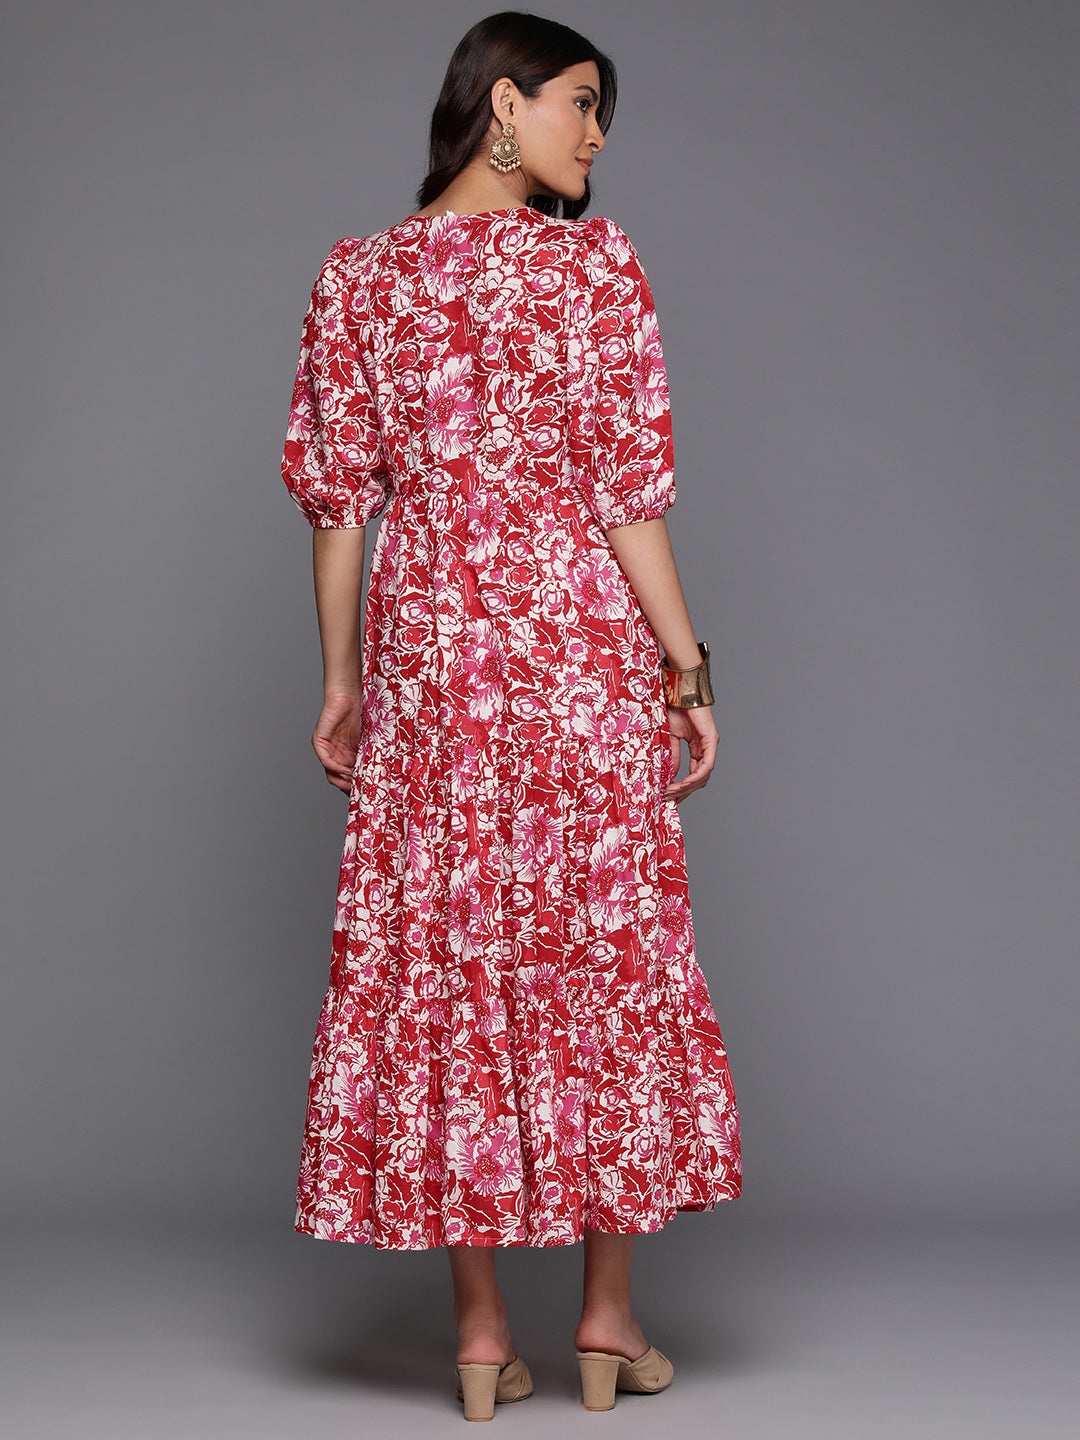 Floral Print Tie-Up Neck Puff Sleeve Cotton A-Line Midi Dress